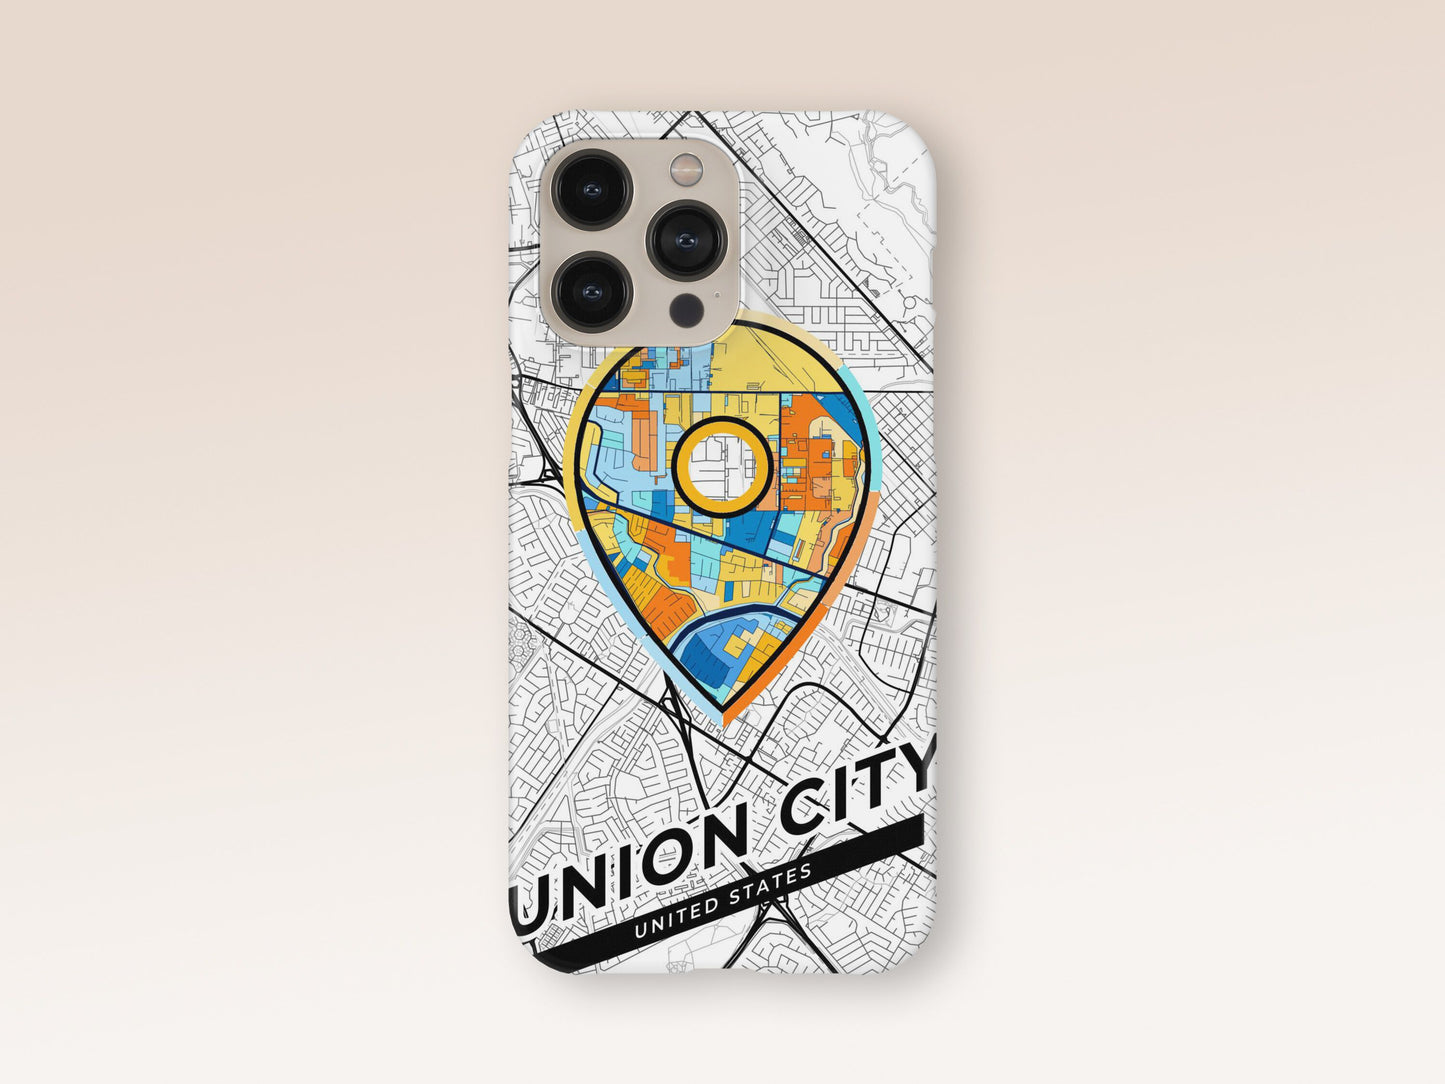 Union City California slim phone case with colorful icon 1